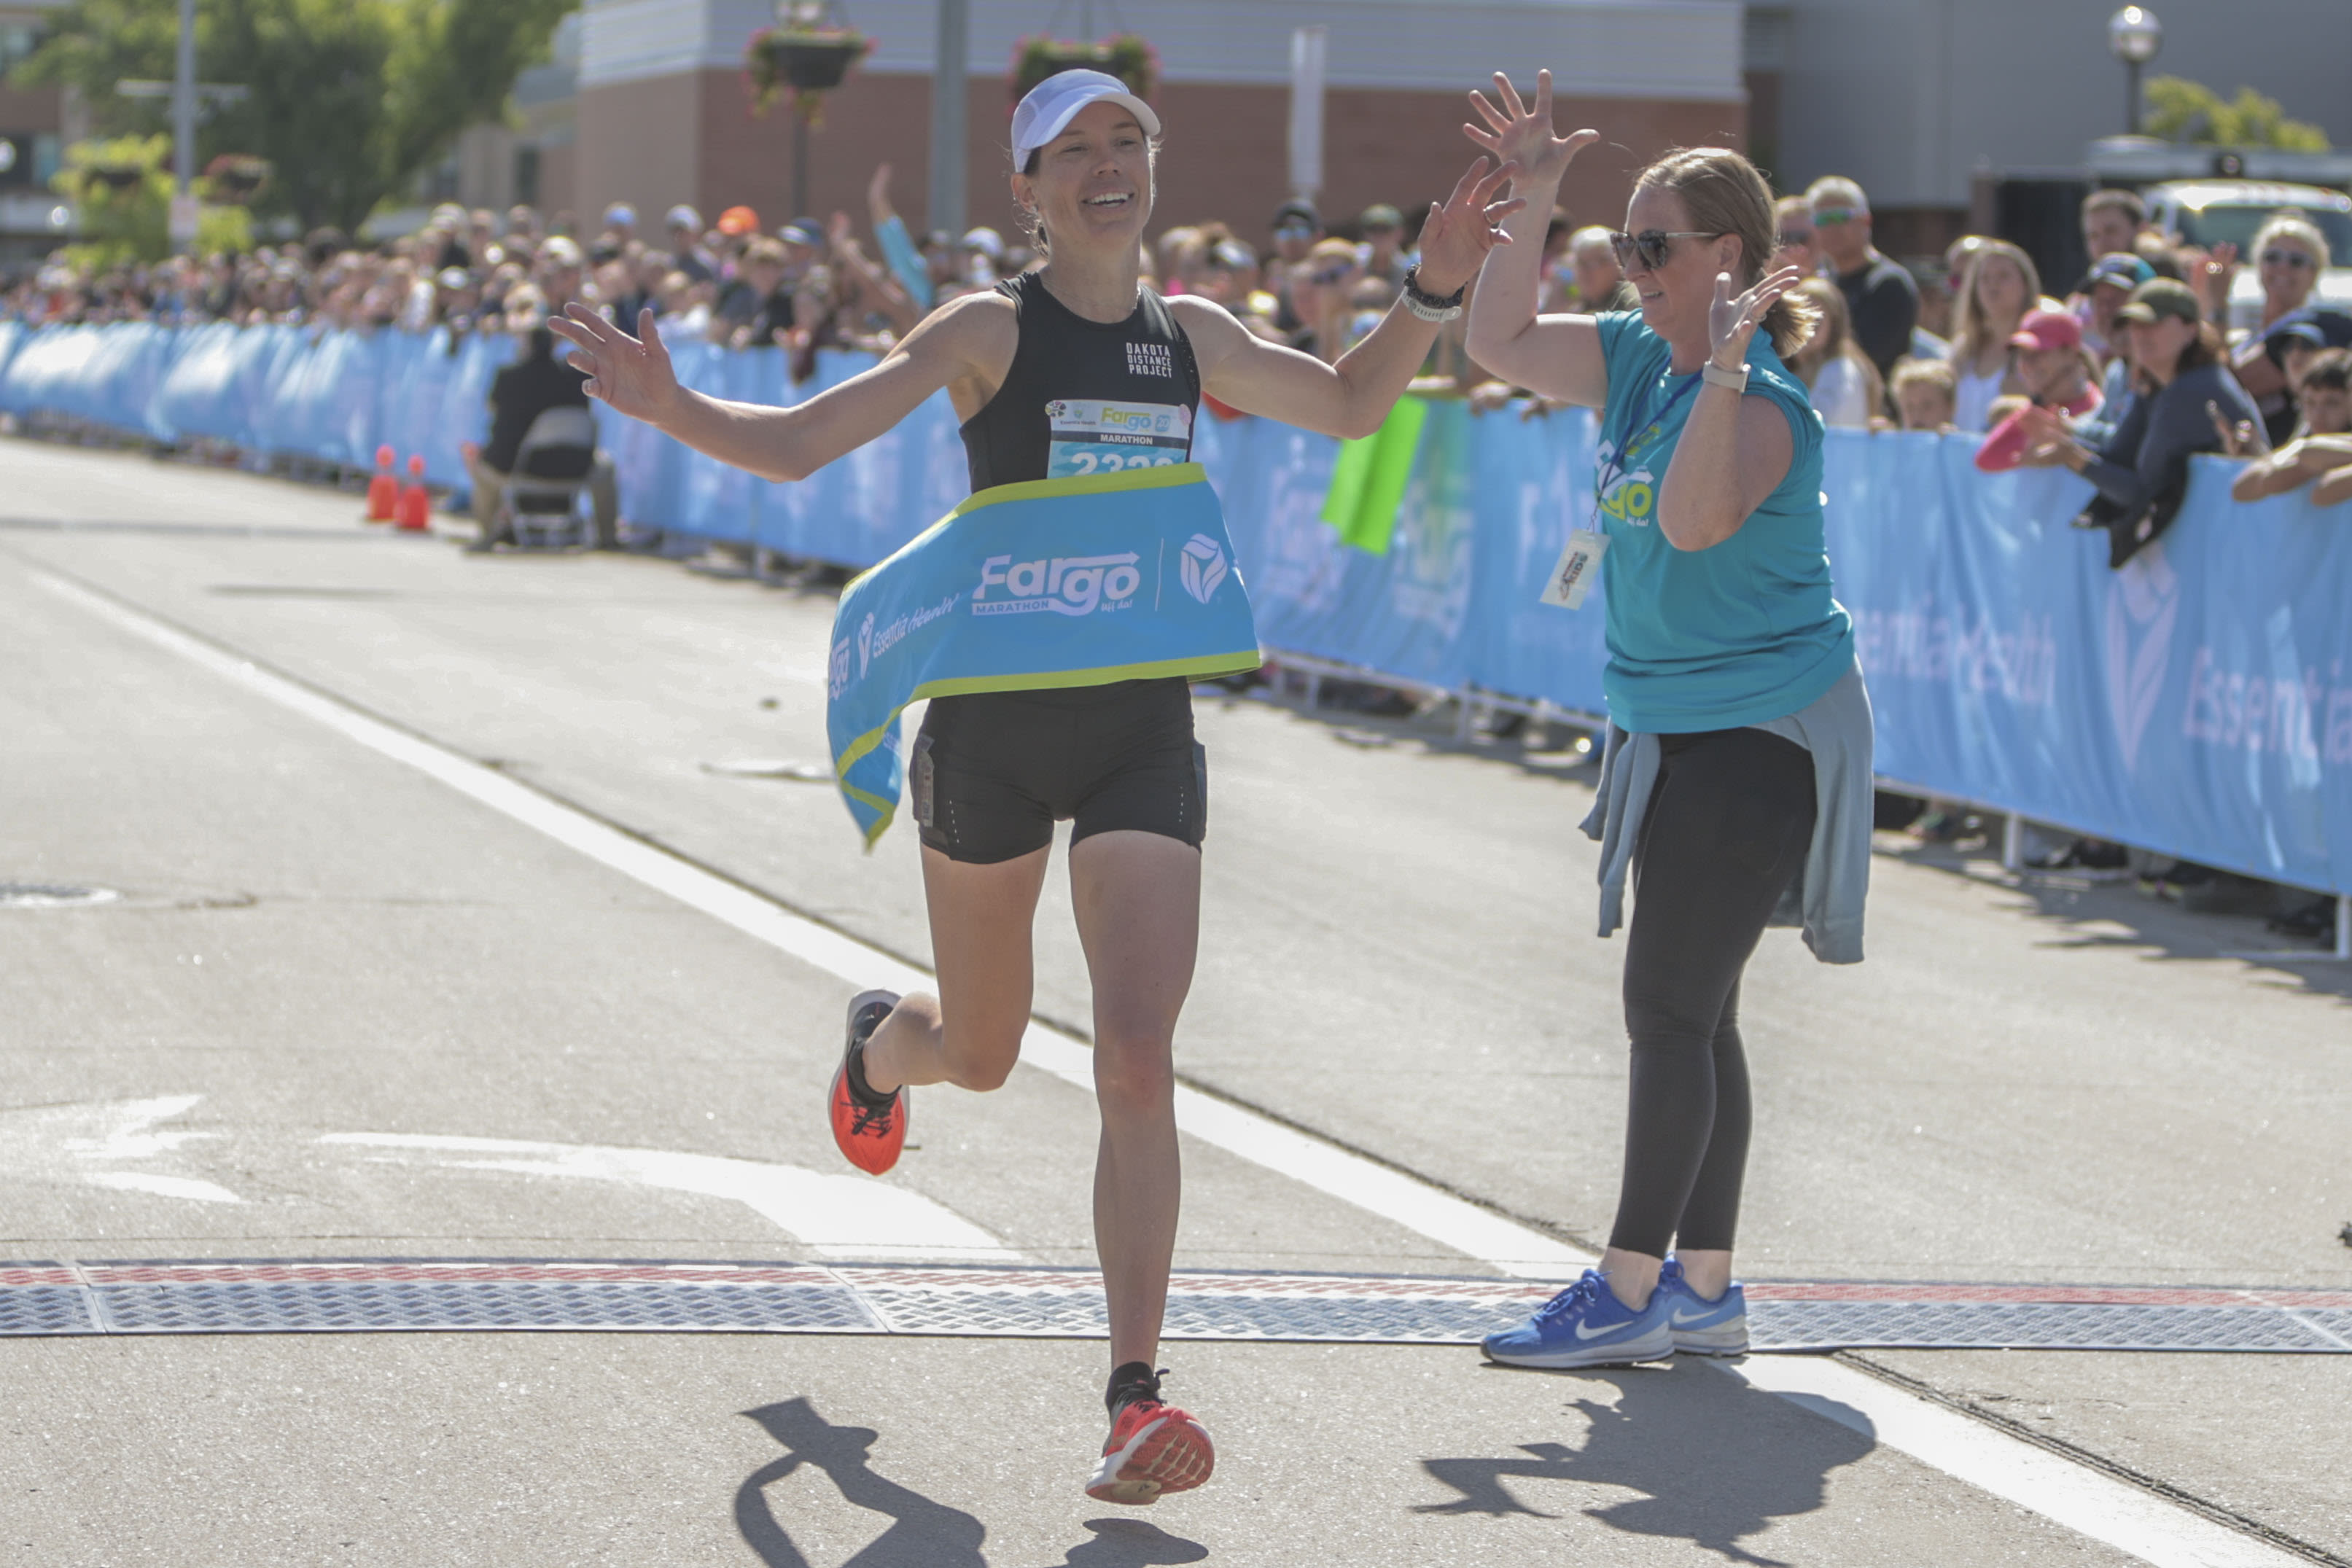 Warren, Minnesota's Amy Will pushes through for women's Fargo Marathon victory